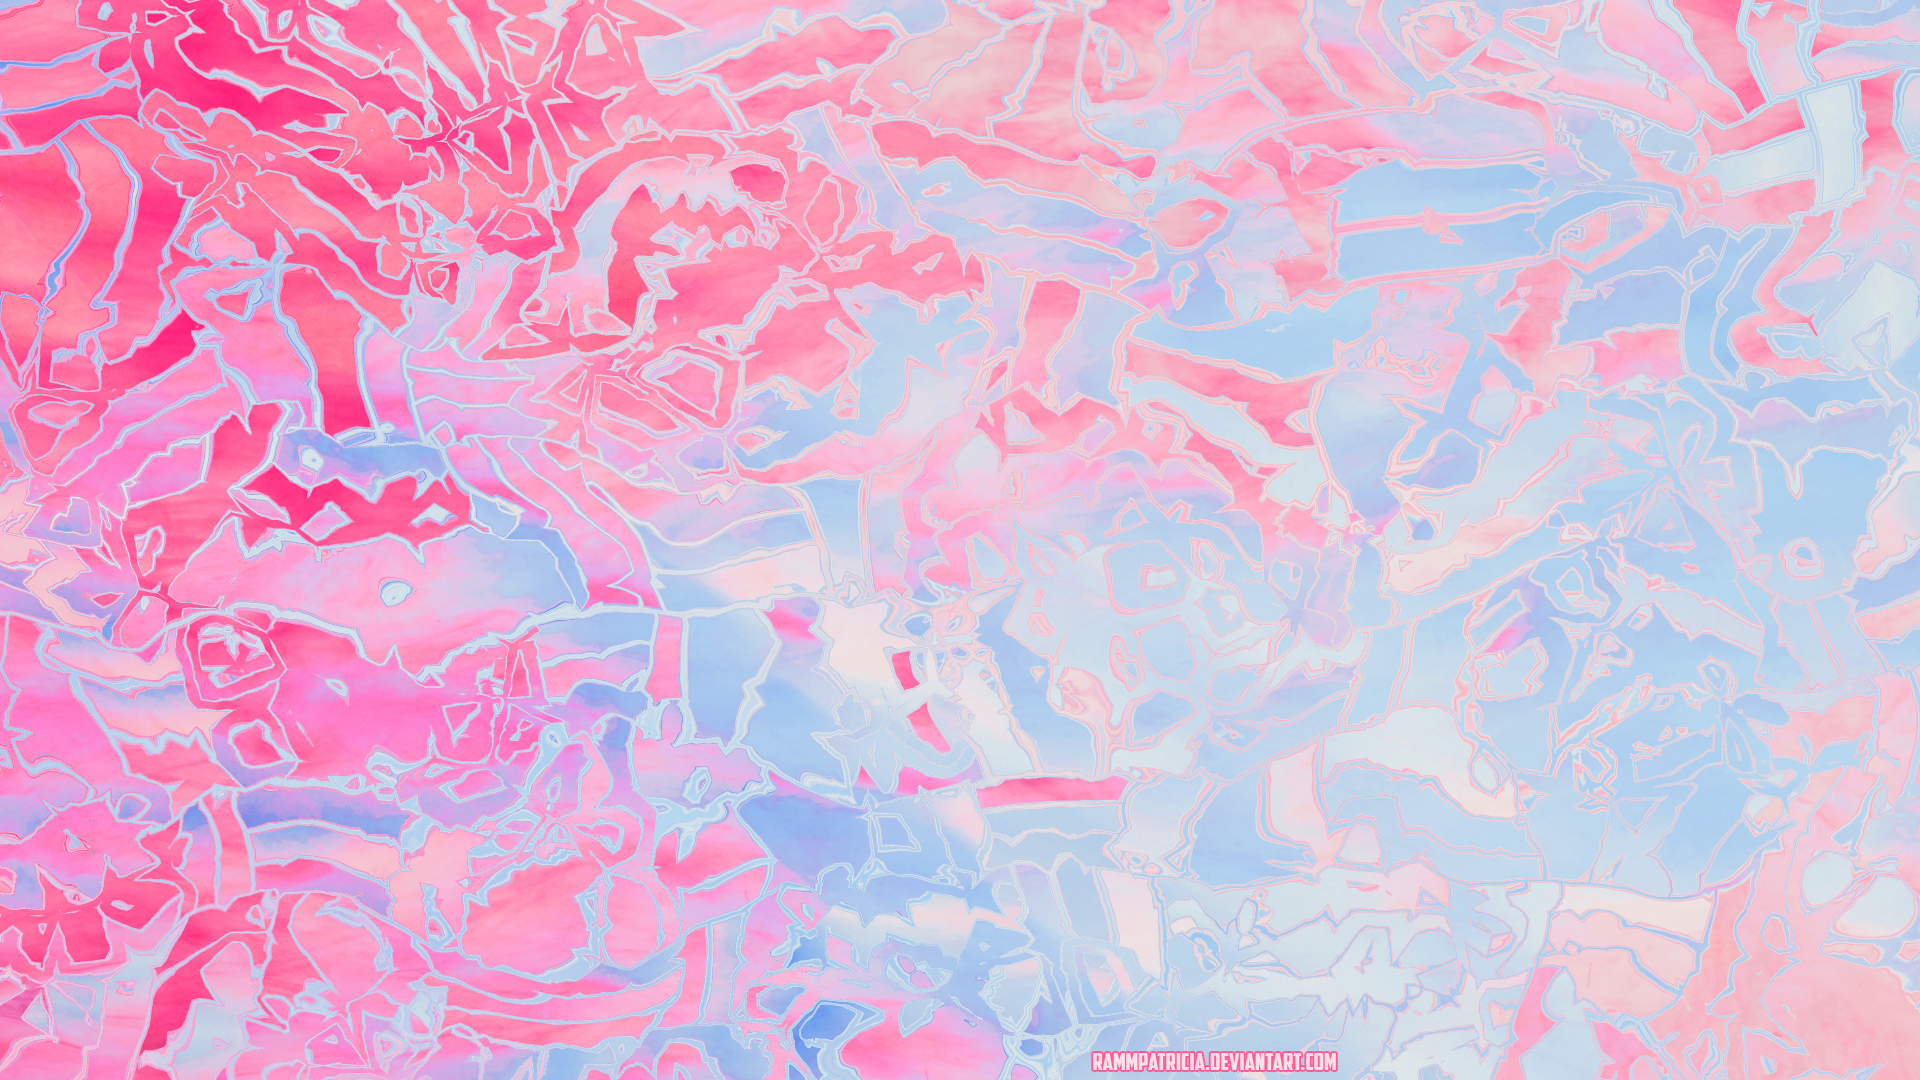 General 1920x1080 RammPatricia digital art abstract summer rose